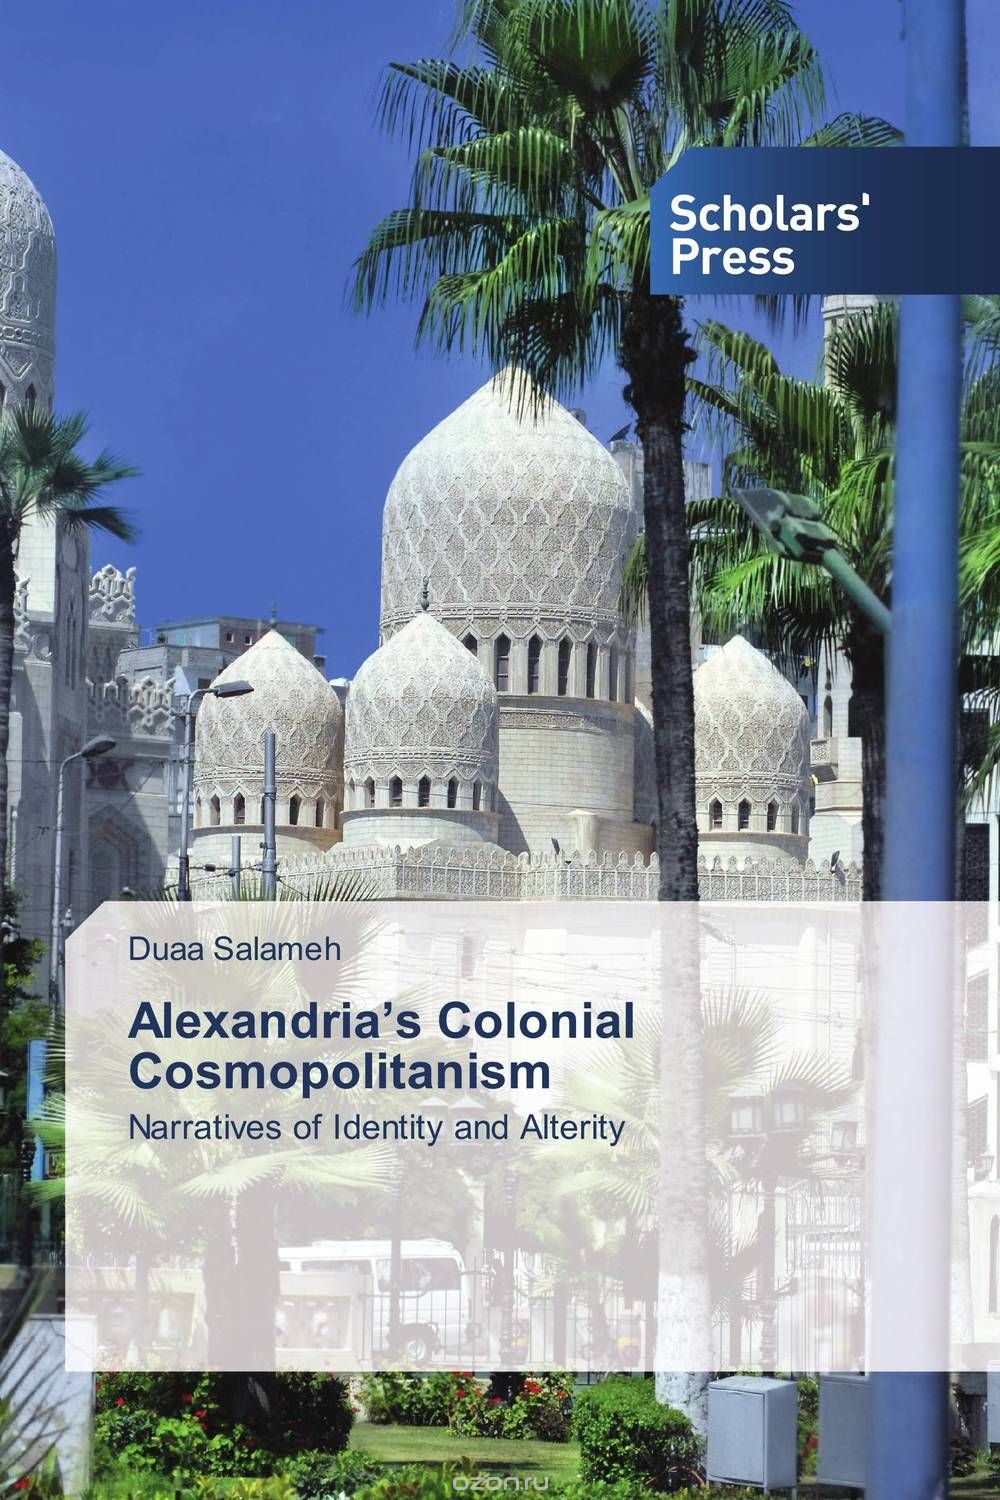 Скачать книгу "Alexandria’s Colonial Cosmopolitanism"